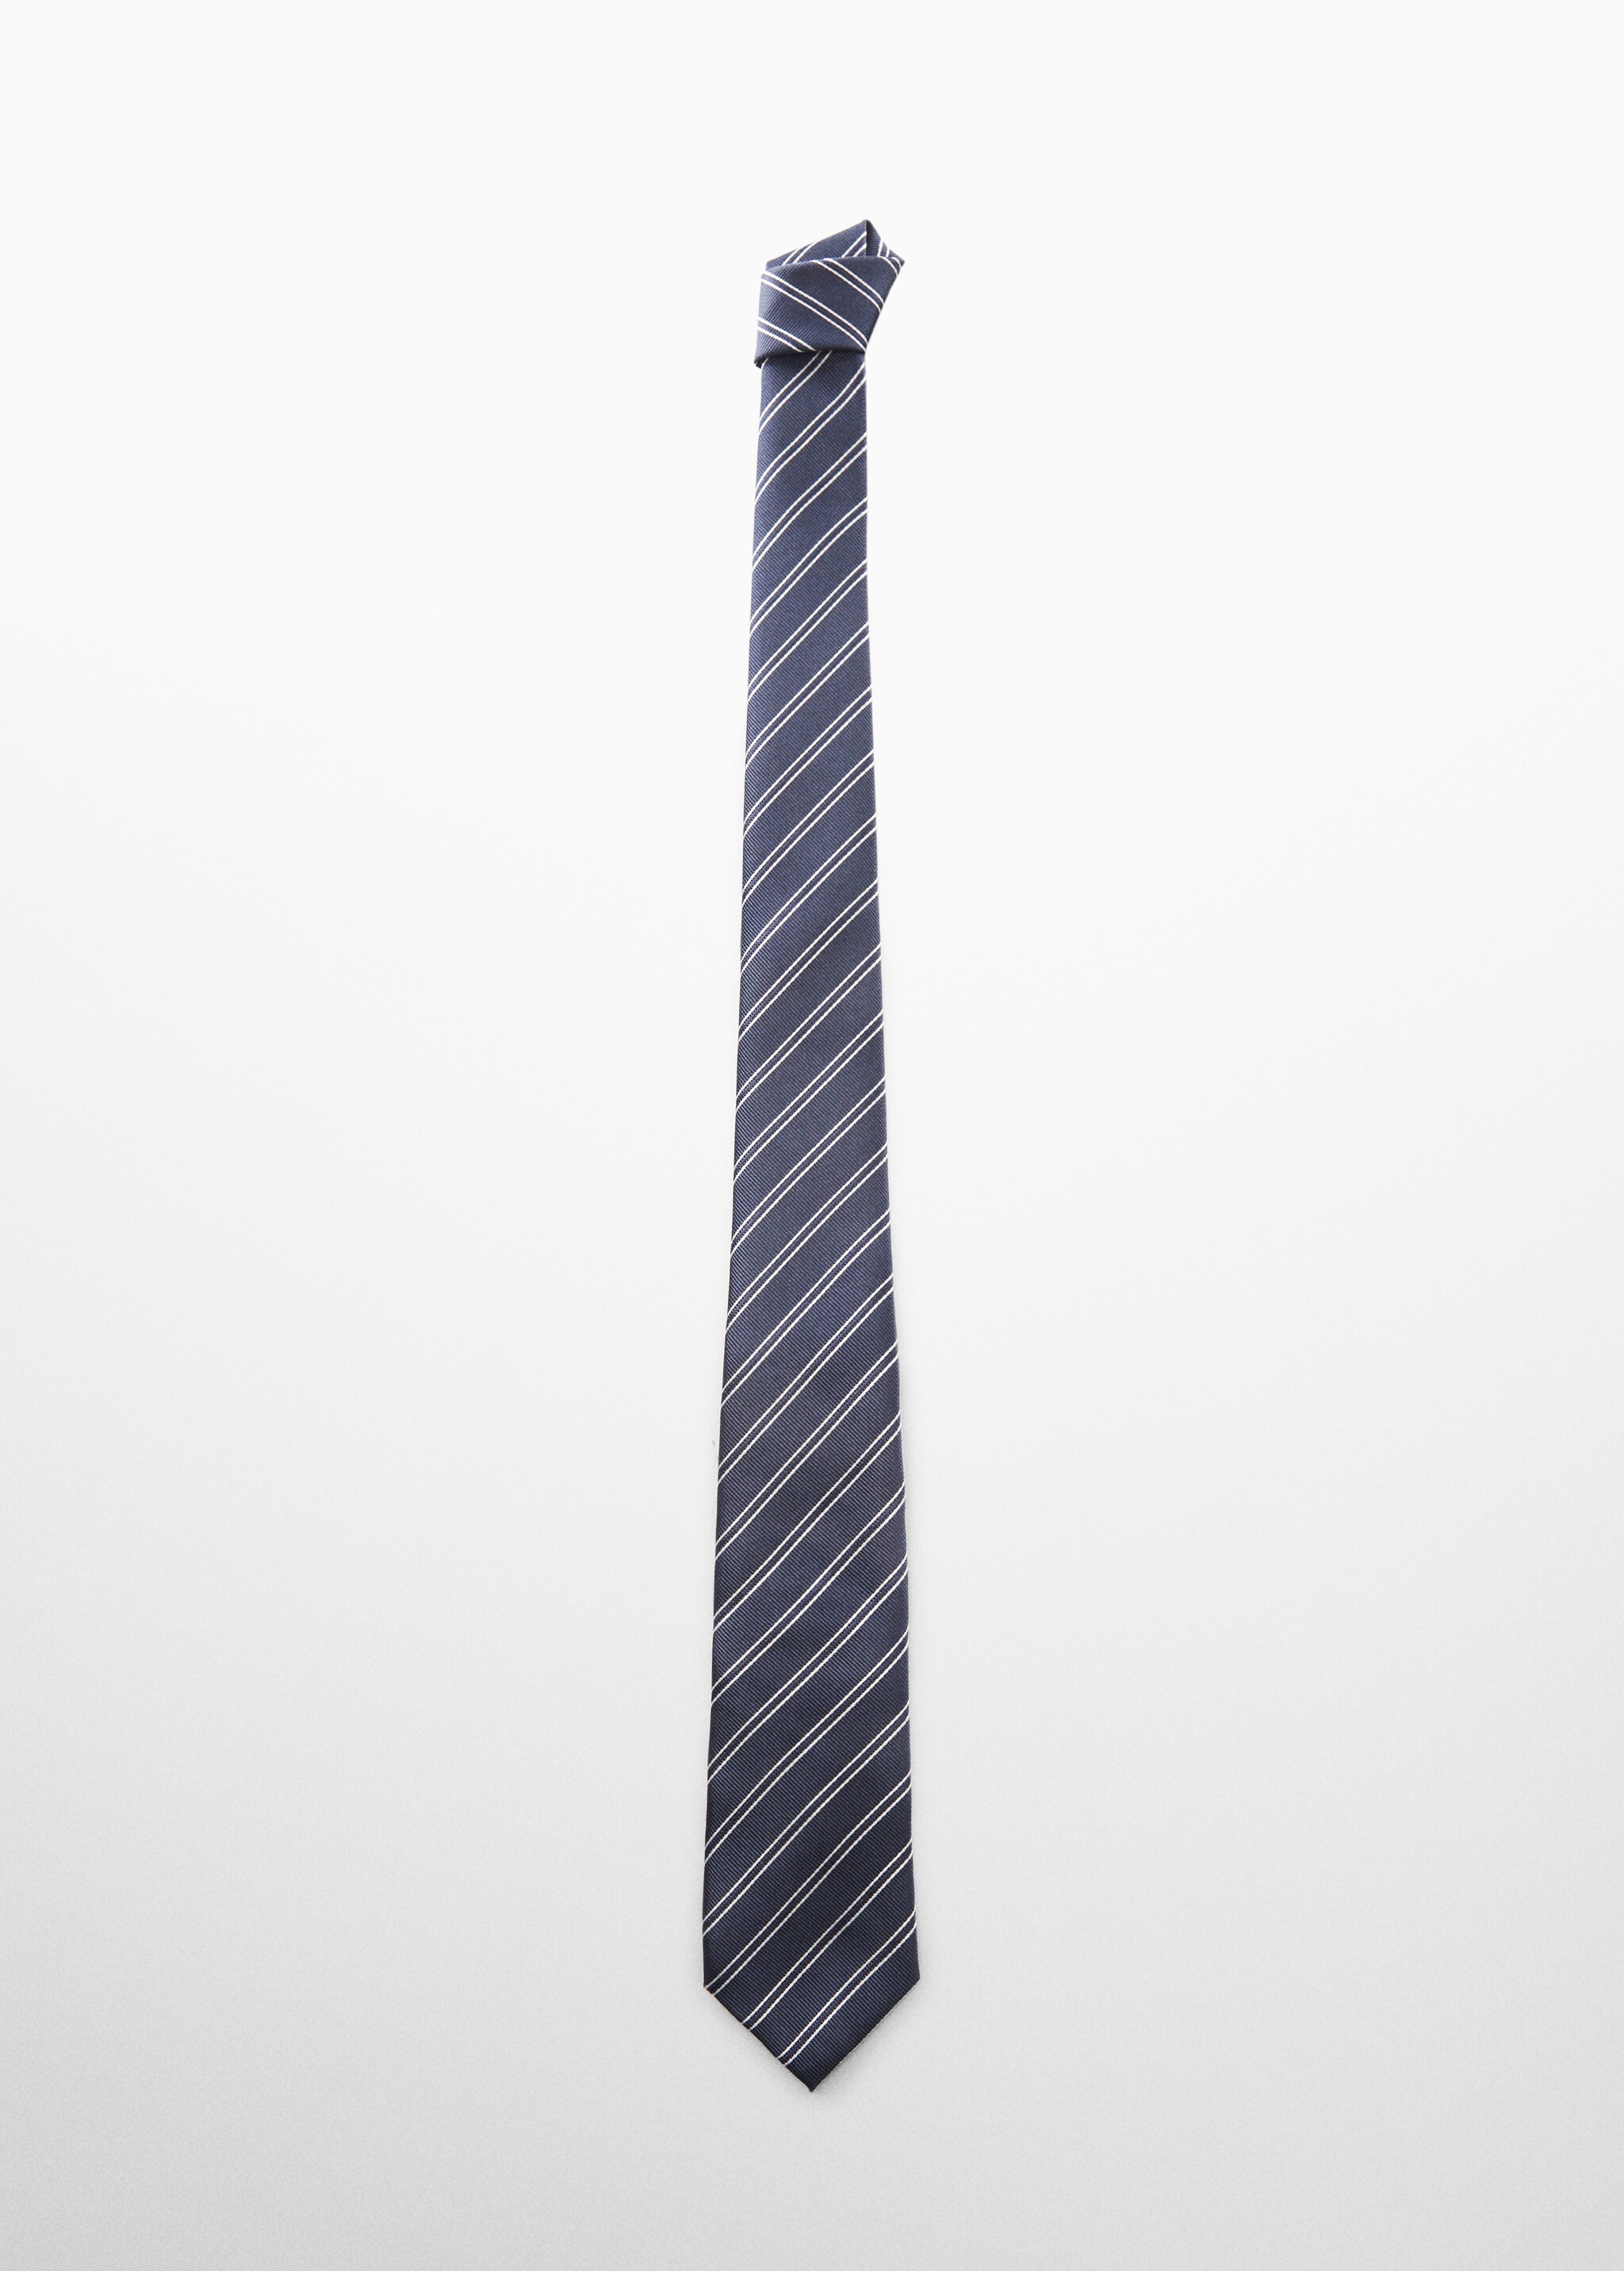 Corbata rayas anti manchas - Artículo sin modelo